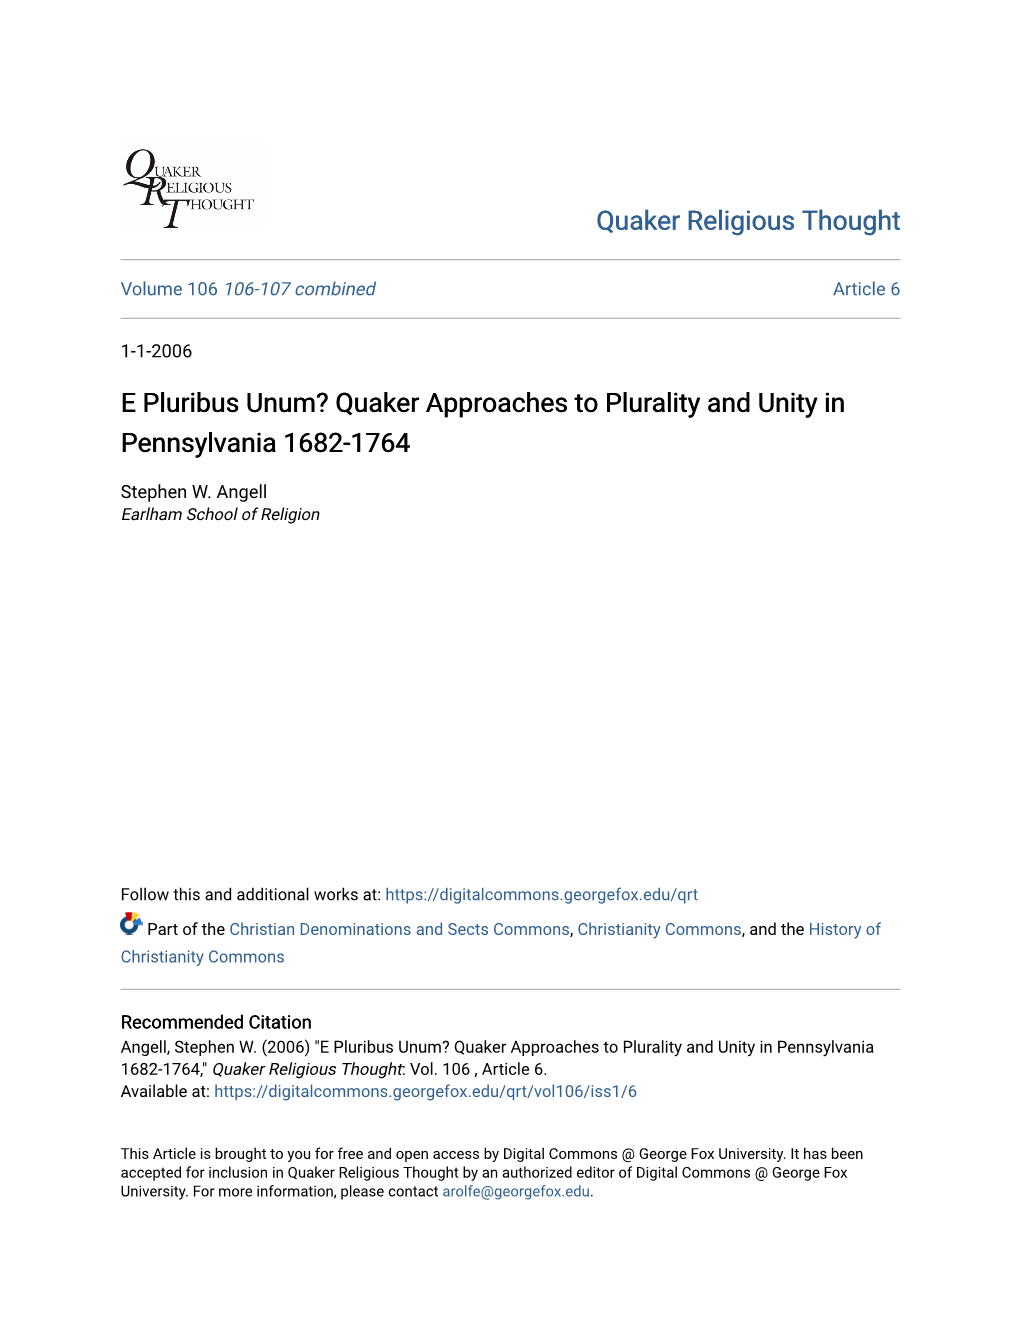 E Pluribus Unum? Quaker Approaches to Plurality and Unity in Pennsylvania 1682-1764